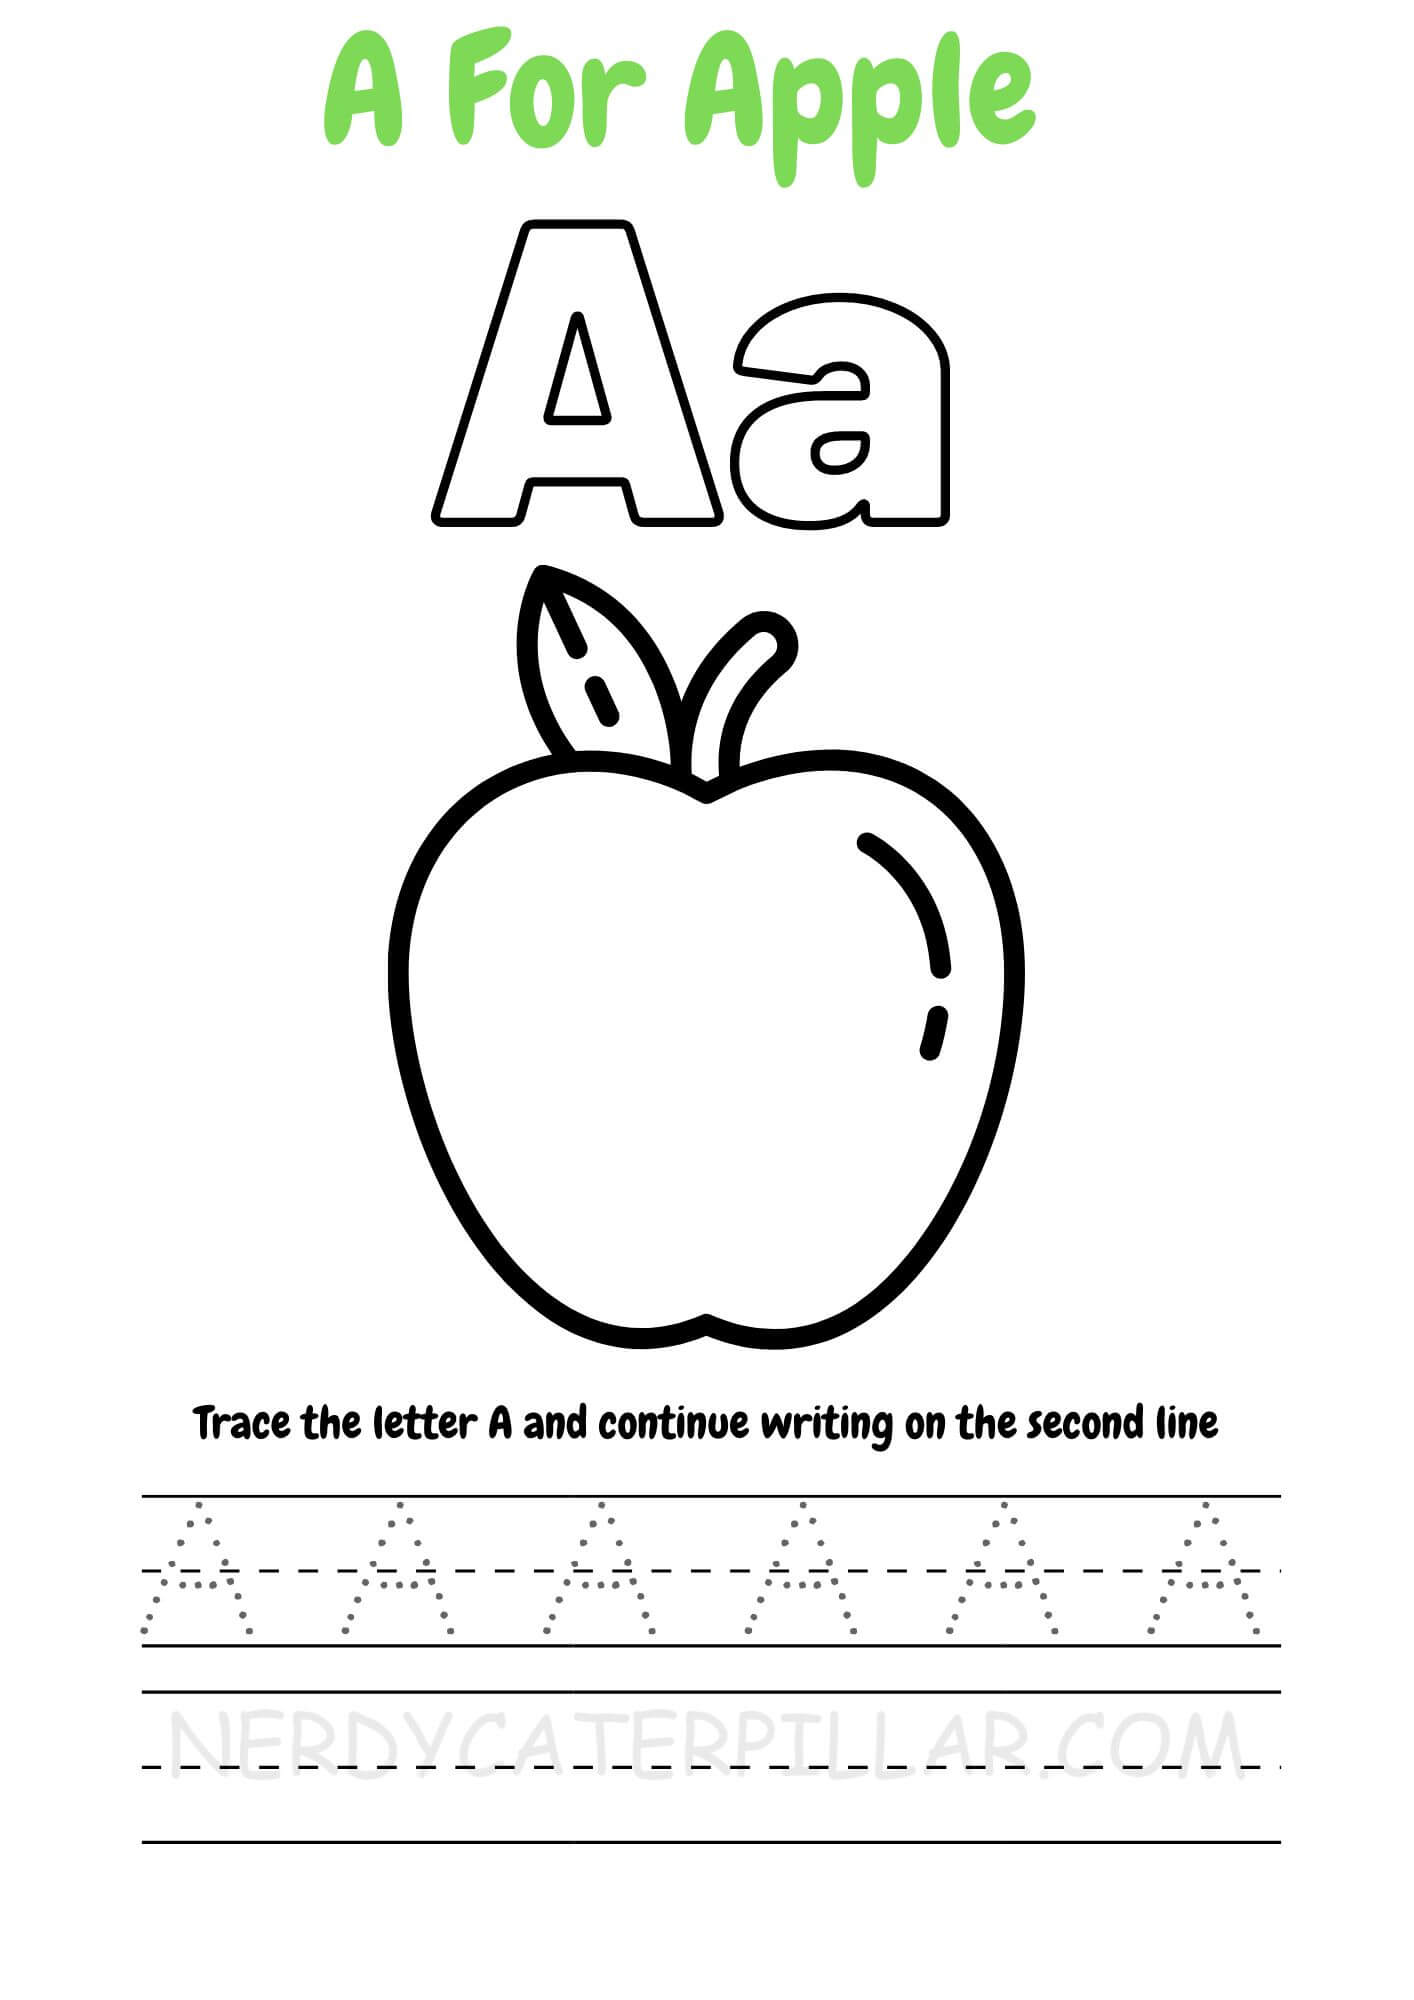 A for Apple worksheet for kids